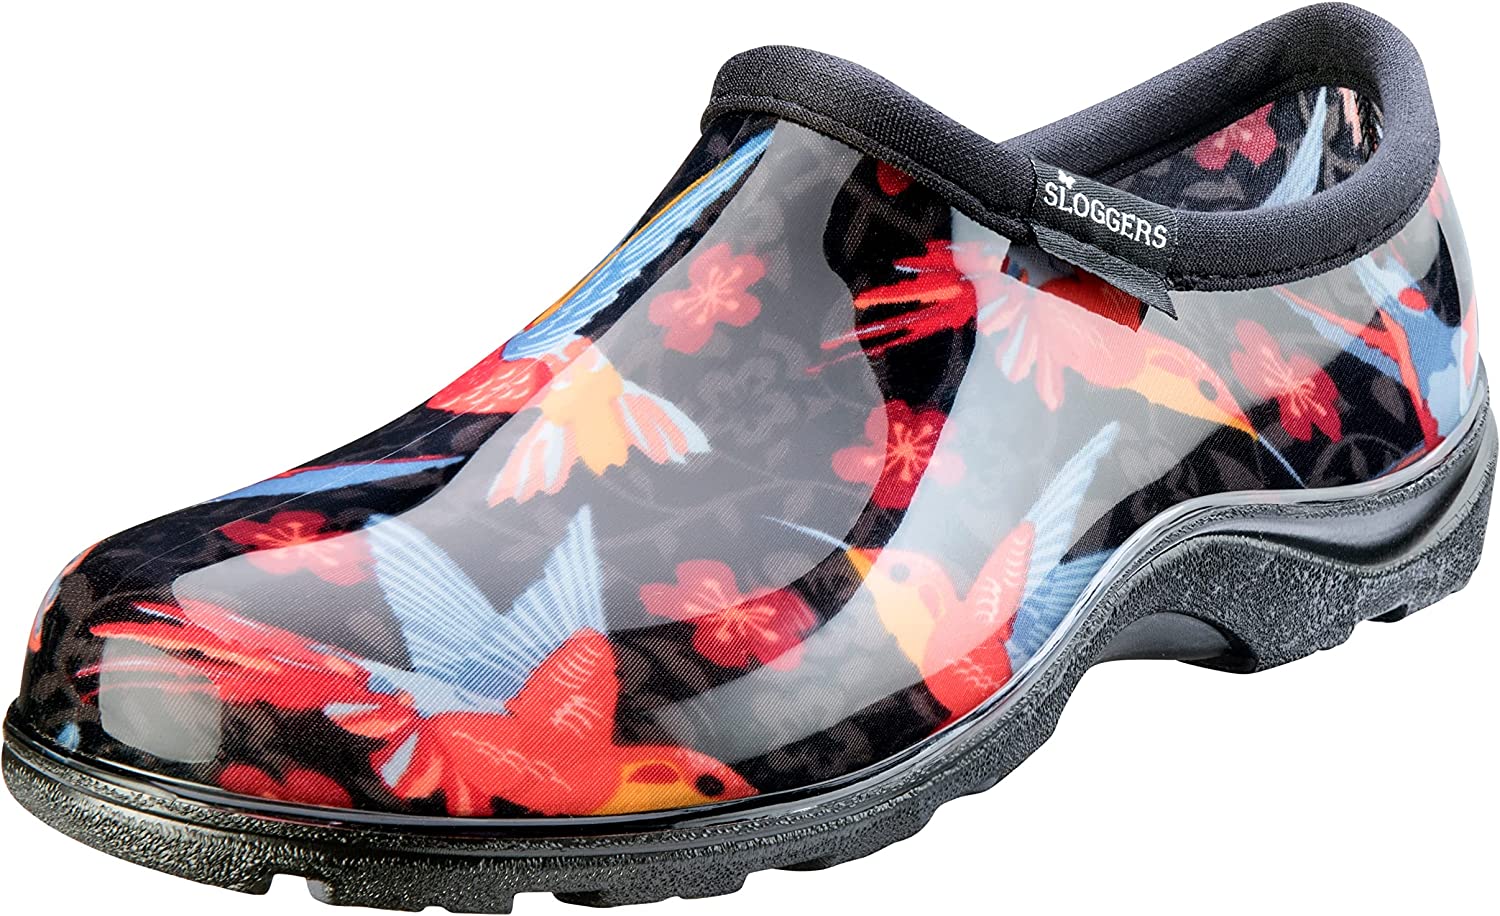 Sloggers Women’s Waterproof Rain Garden Shoe Comfort Insole, Hummingbirds Red, Size 8, Style 5117HUMRD08